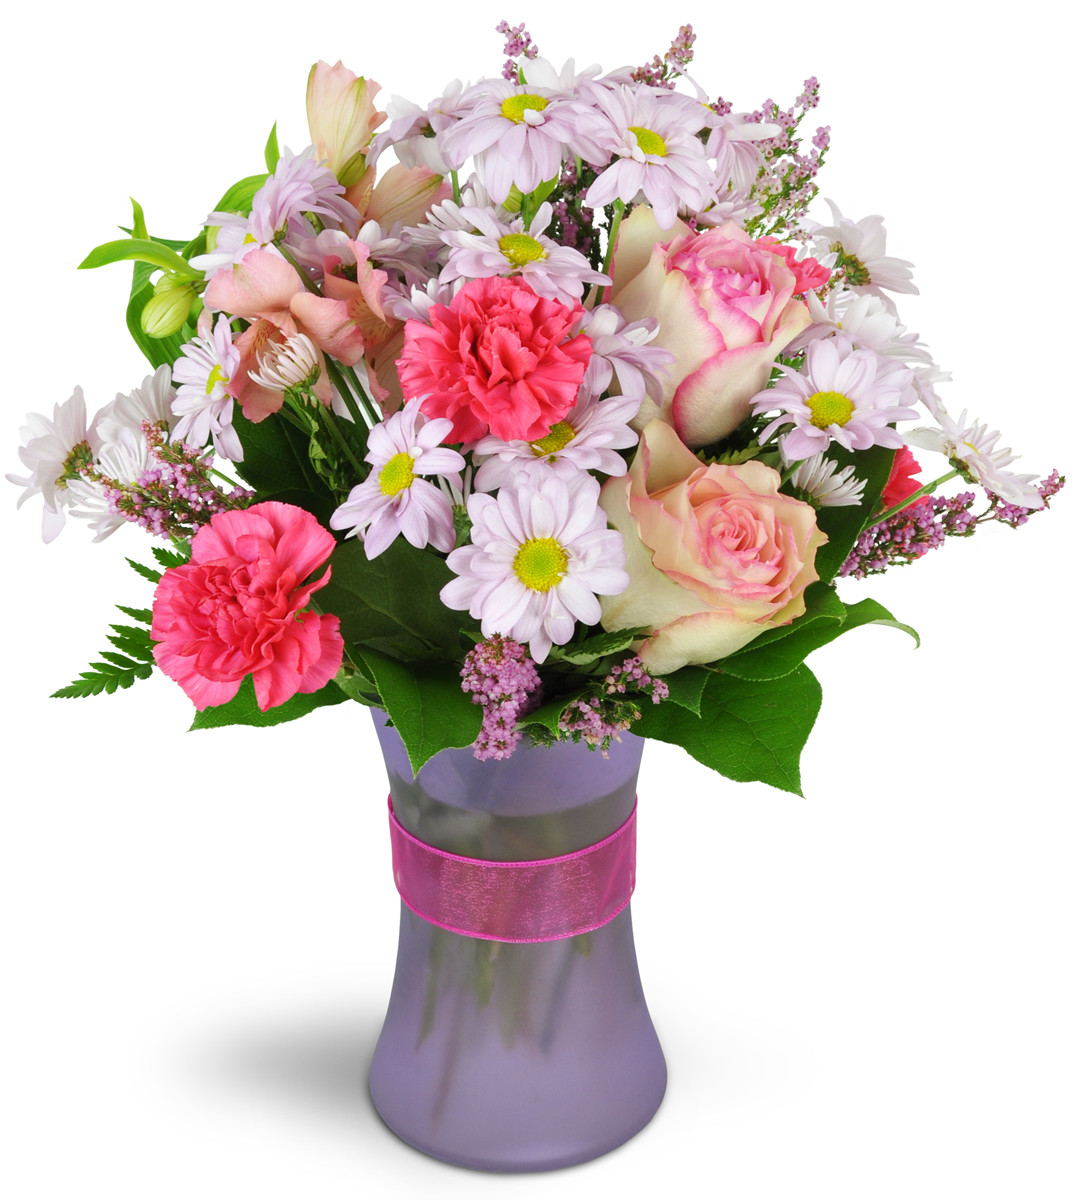 17 Ideal Ftd Cross Vase 2022 free download ftd cross vase of daydream breeze london on florist pertaining to uorvj2lhfhk97wkgkm0k